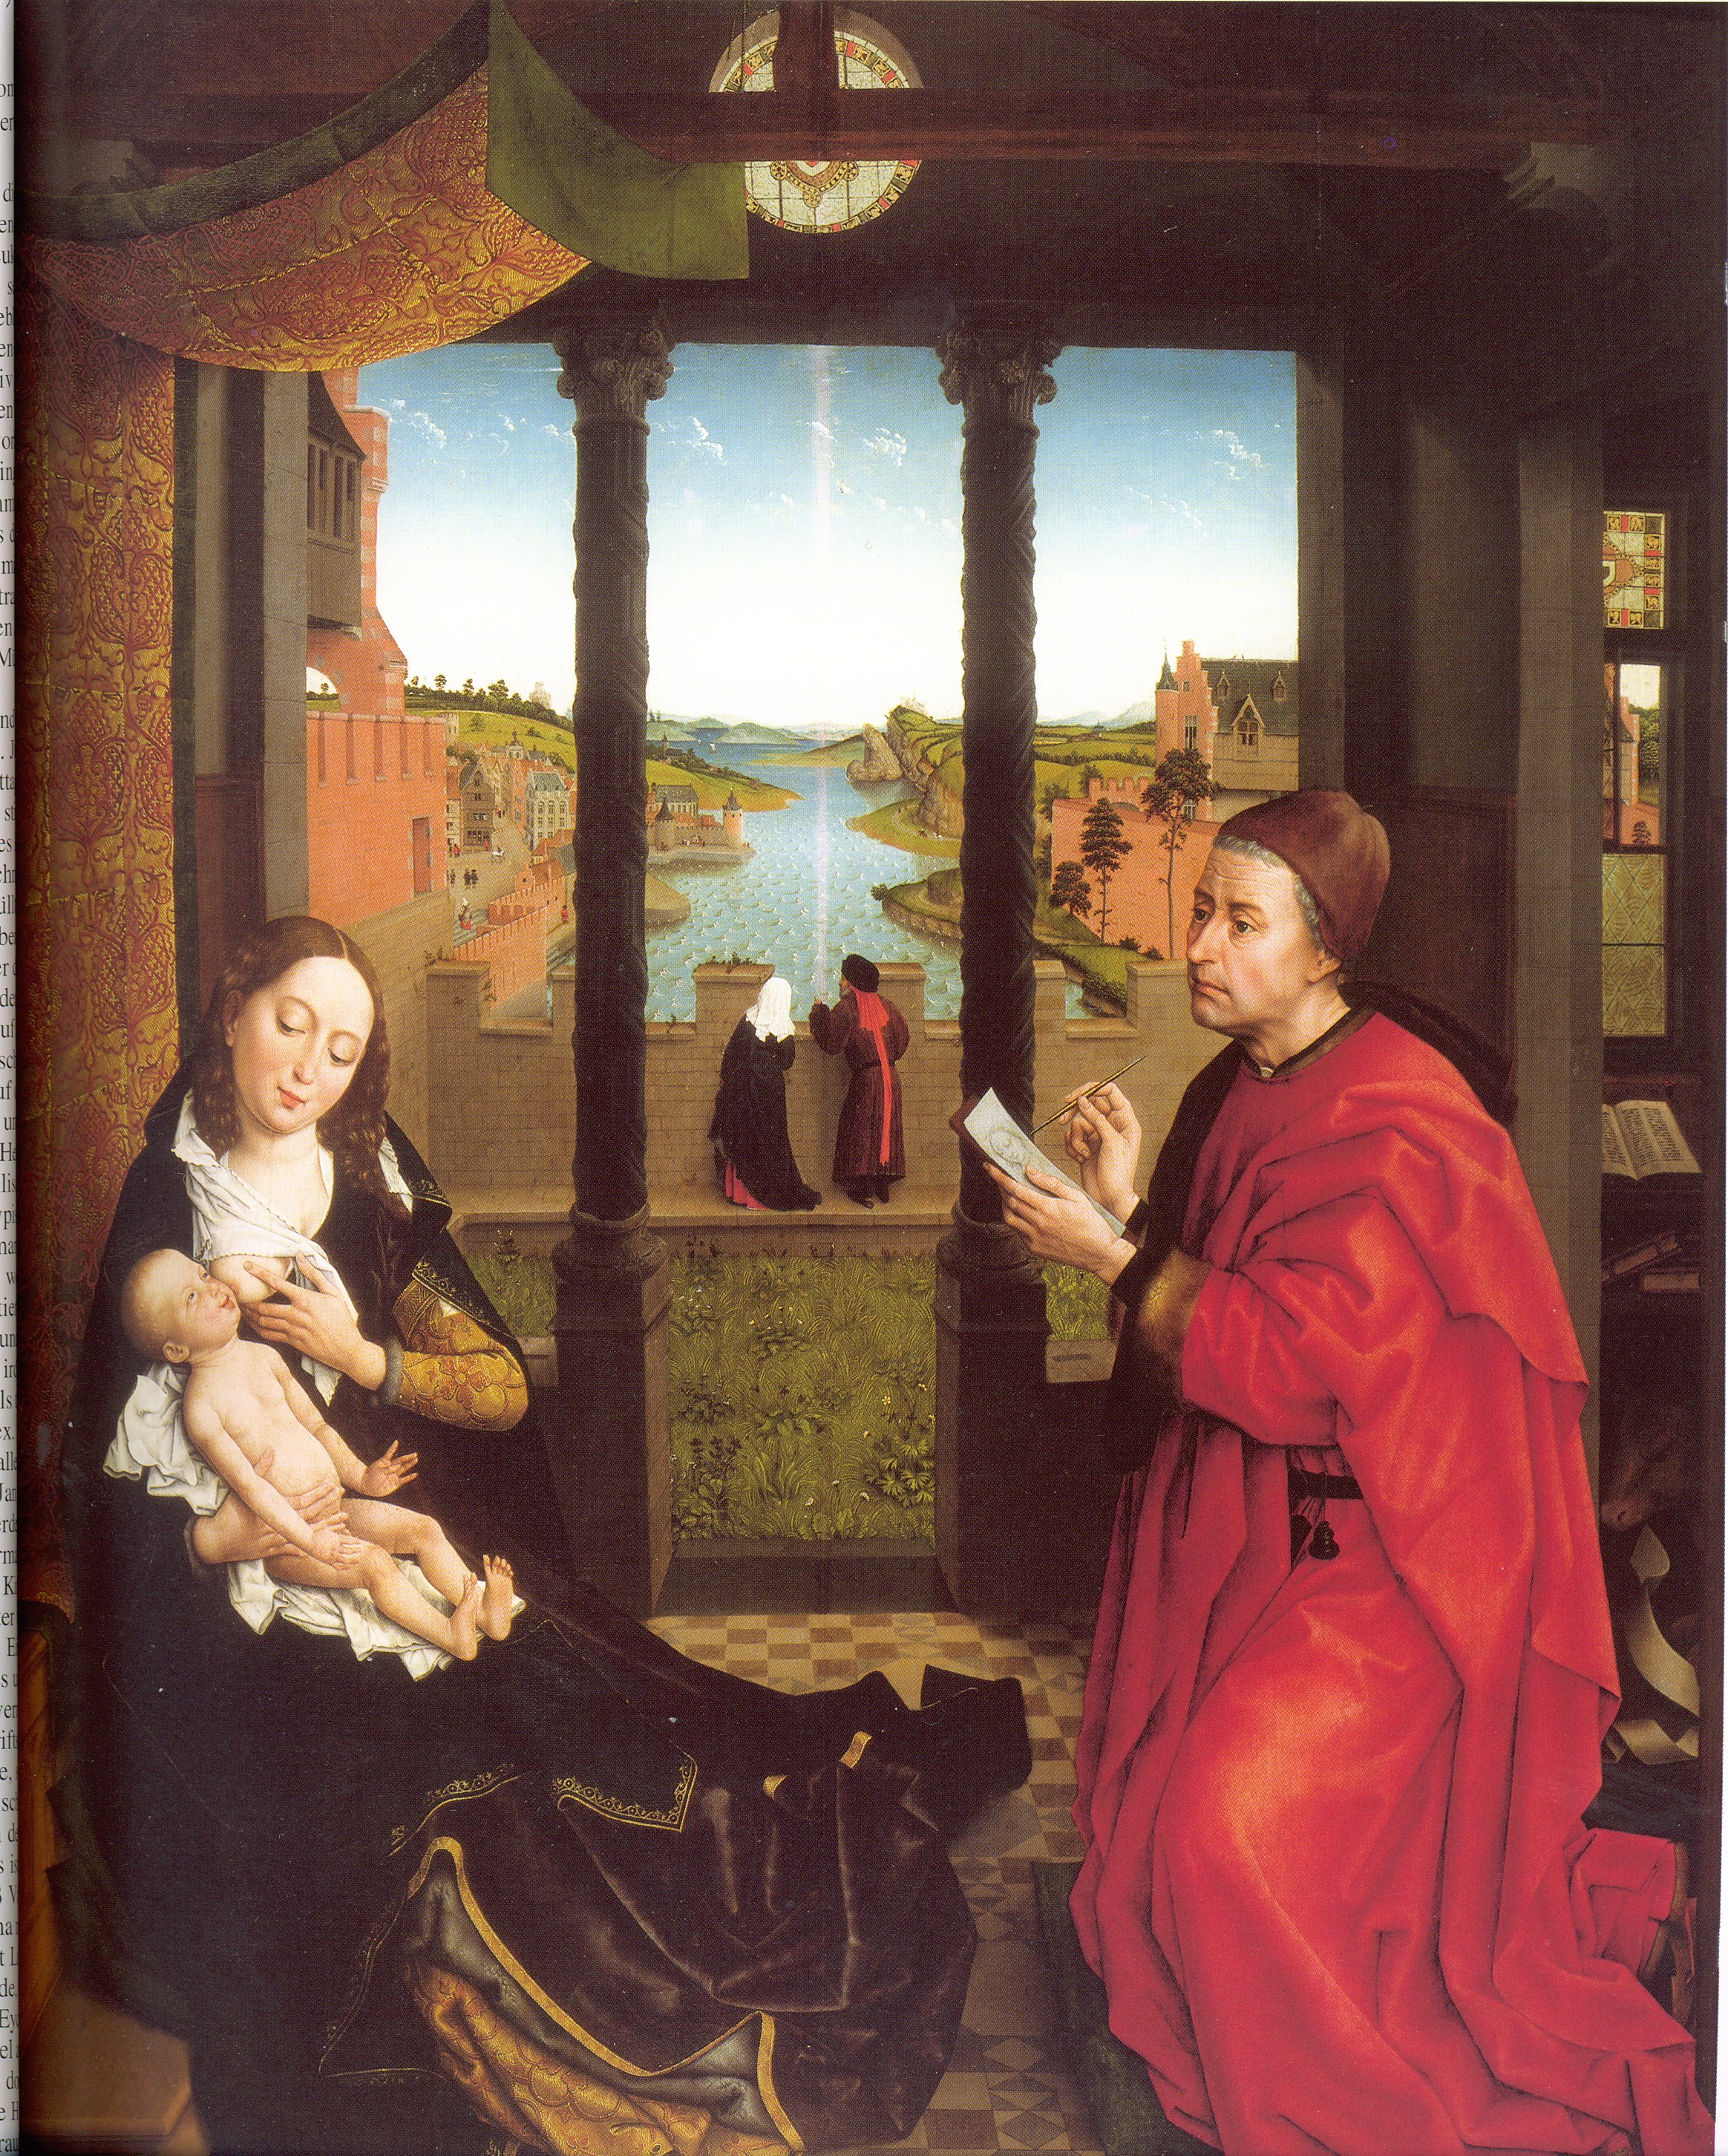 Rogier Van der Weydent - Saint-Luc painting the portrait of the Virgin